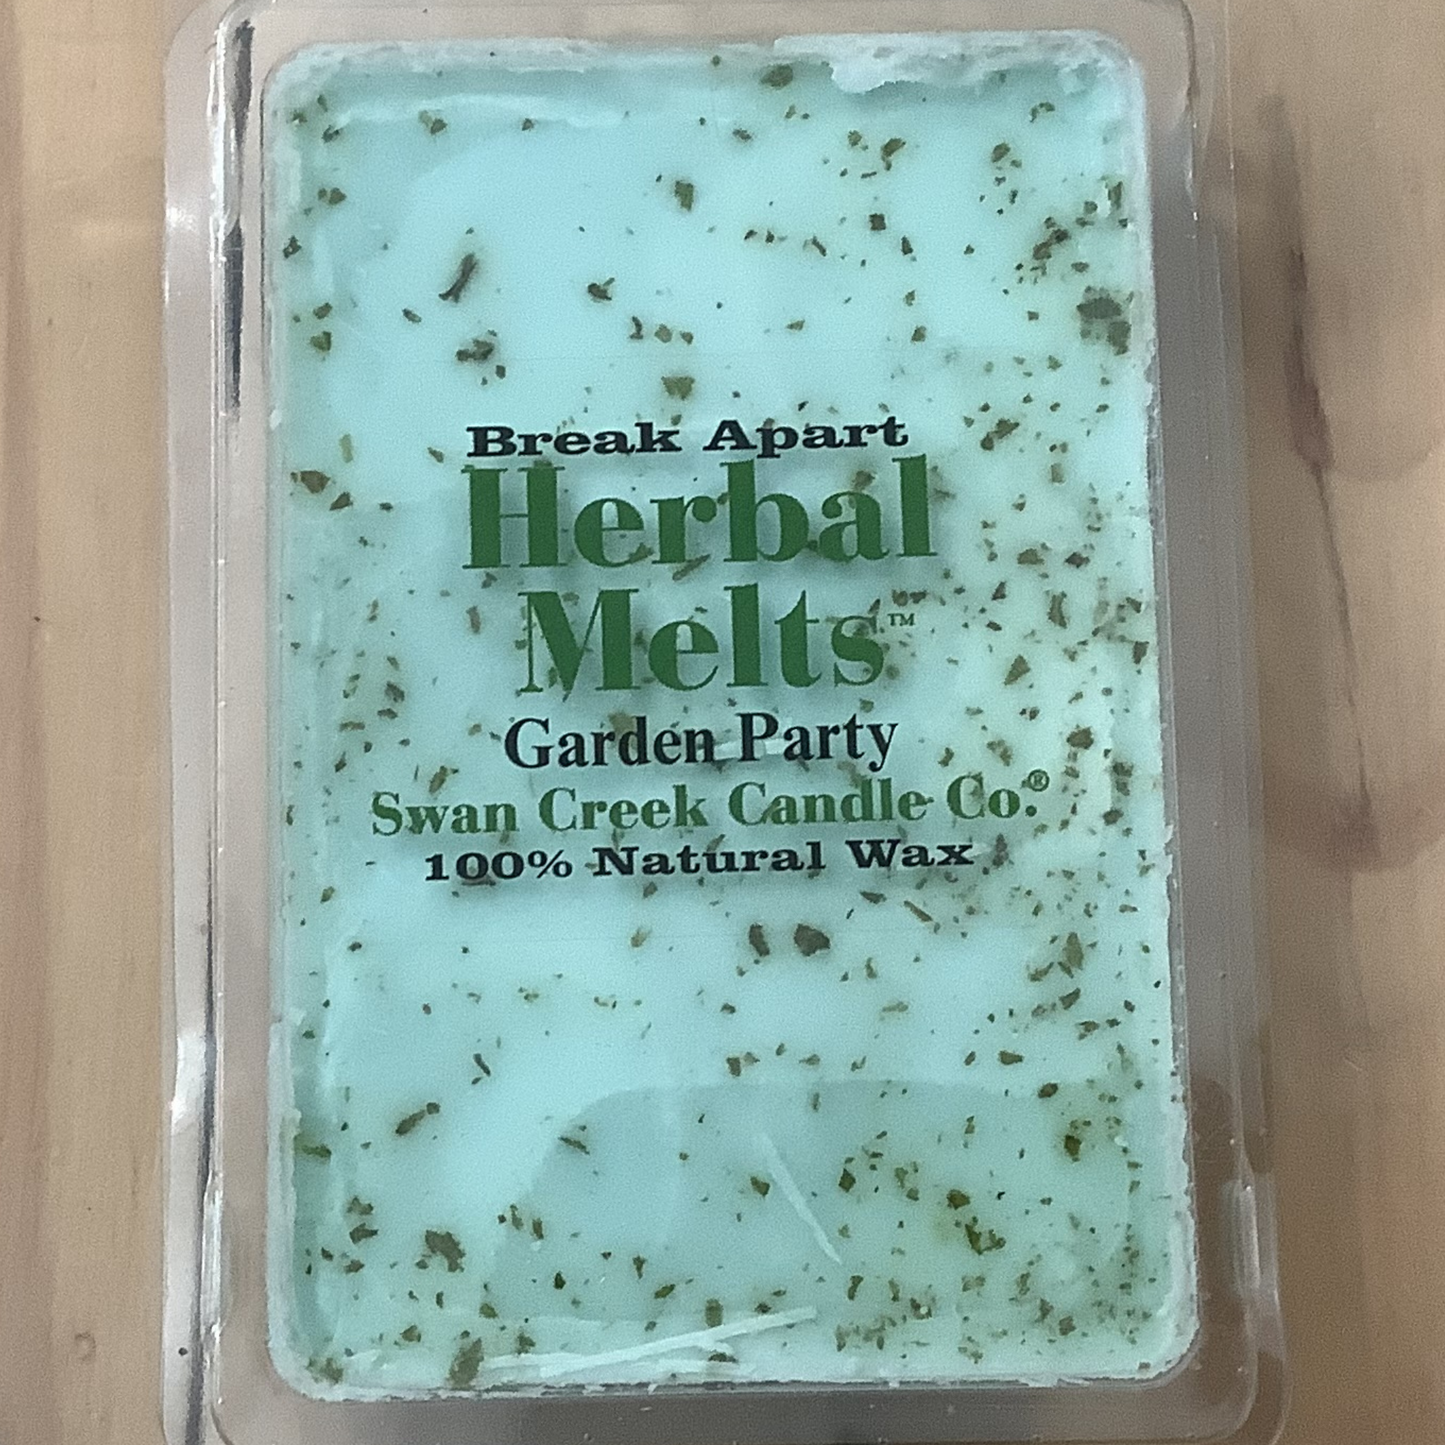 Garden Party Herbal Melts